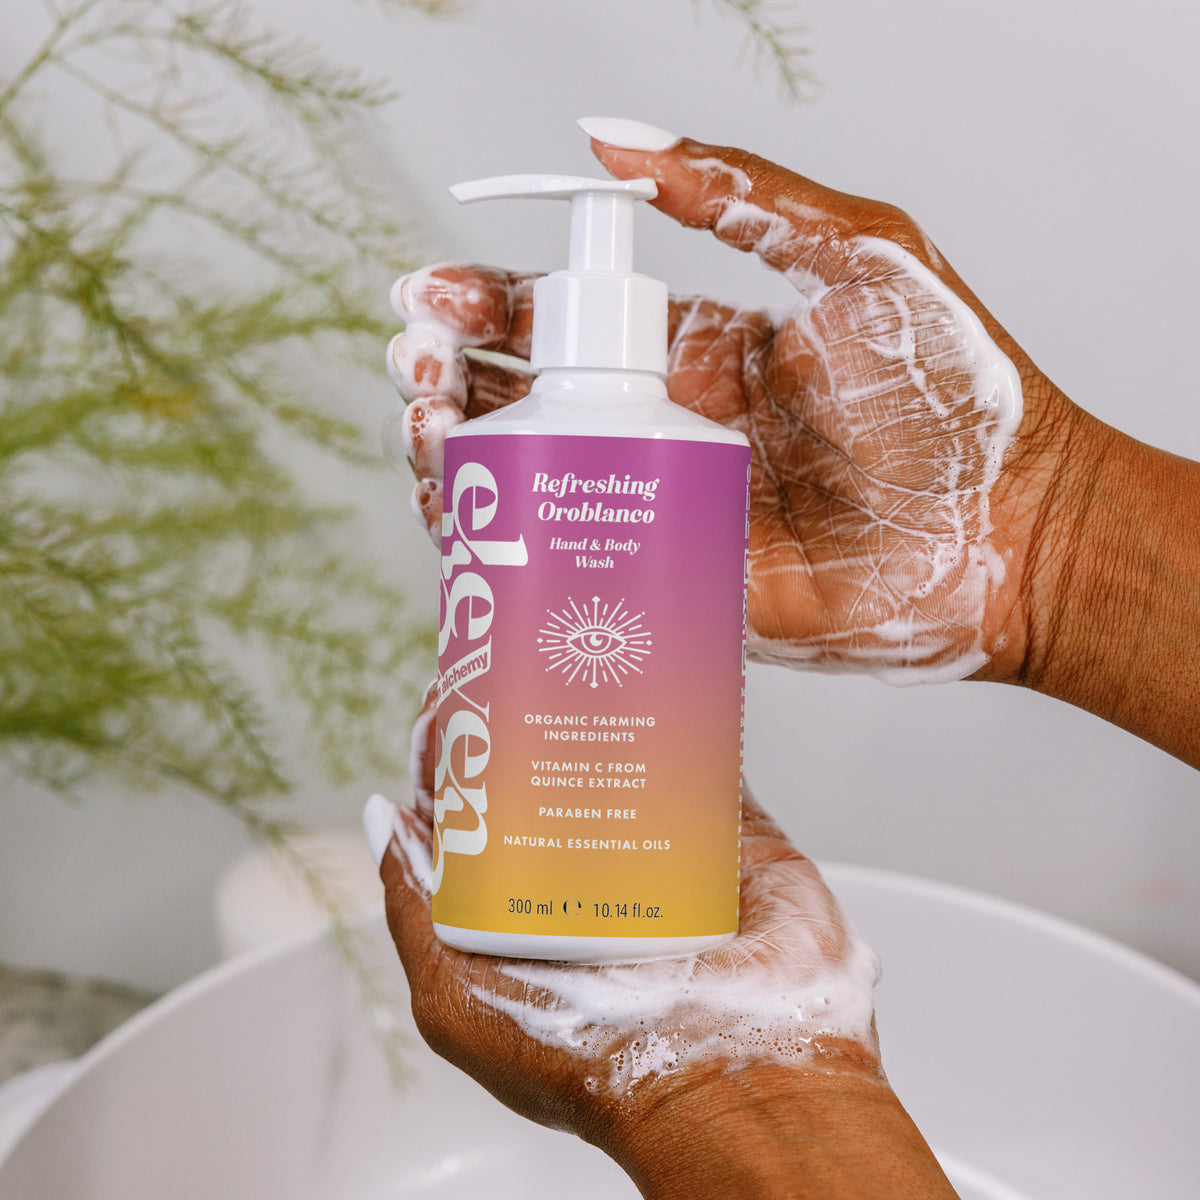 Refreshing Oroblanco hand & body wash